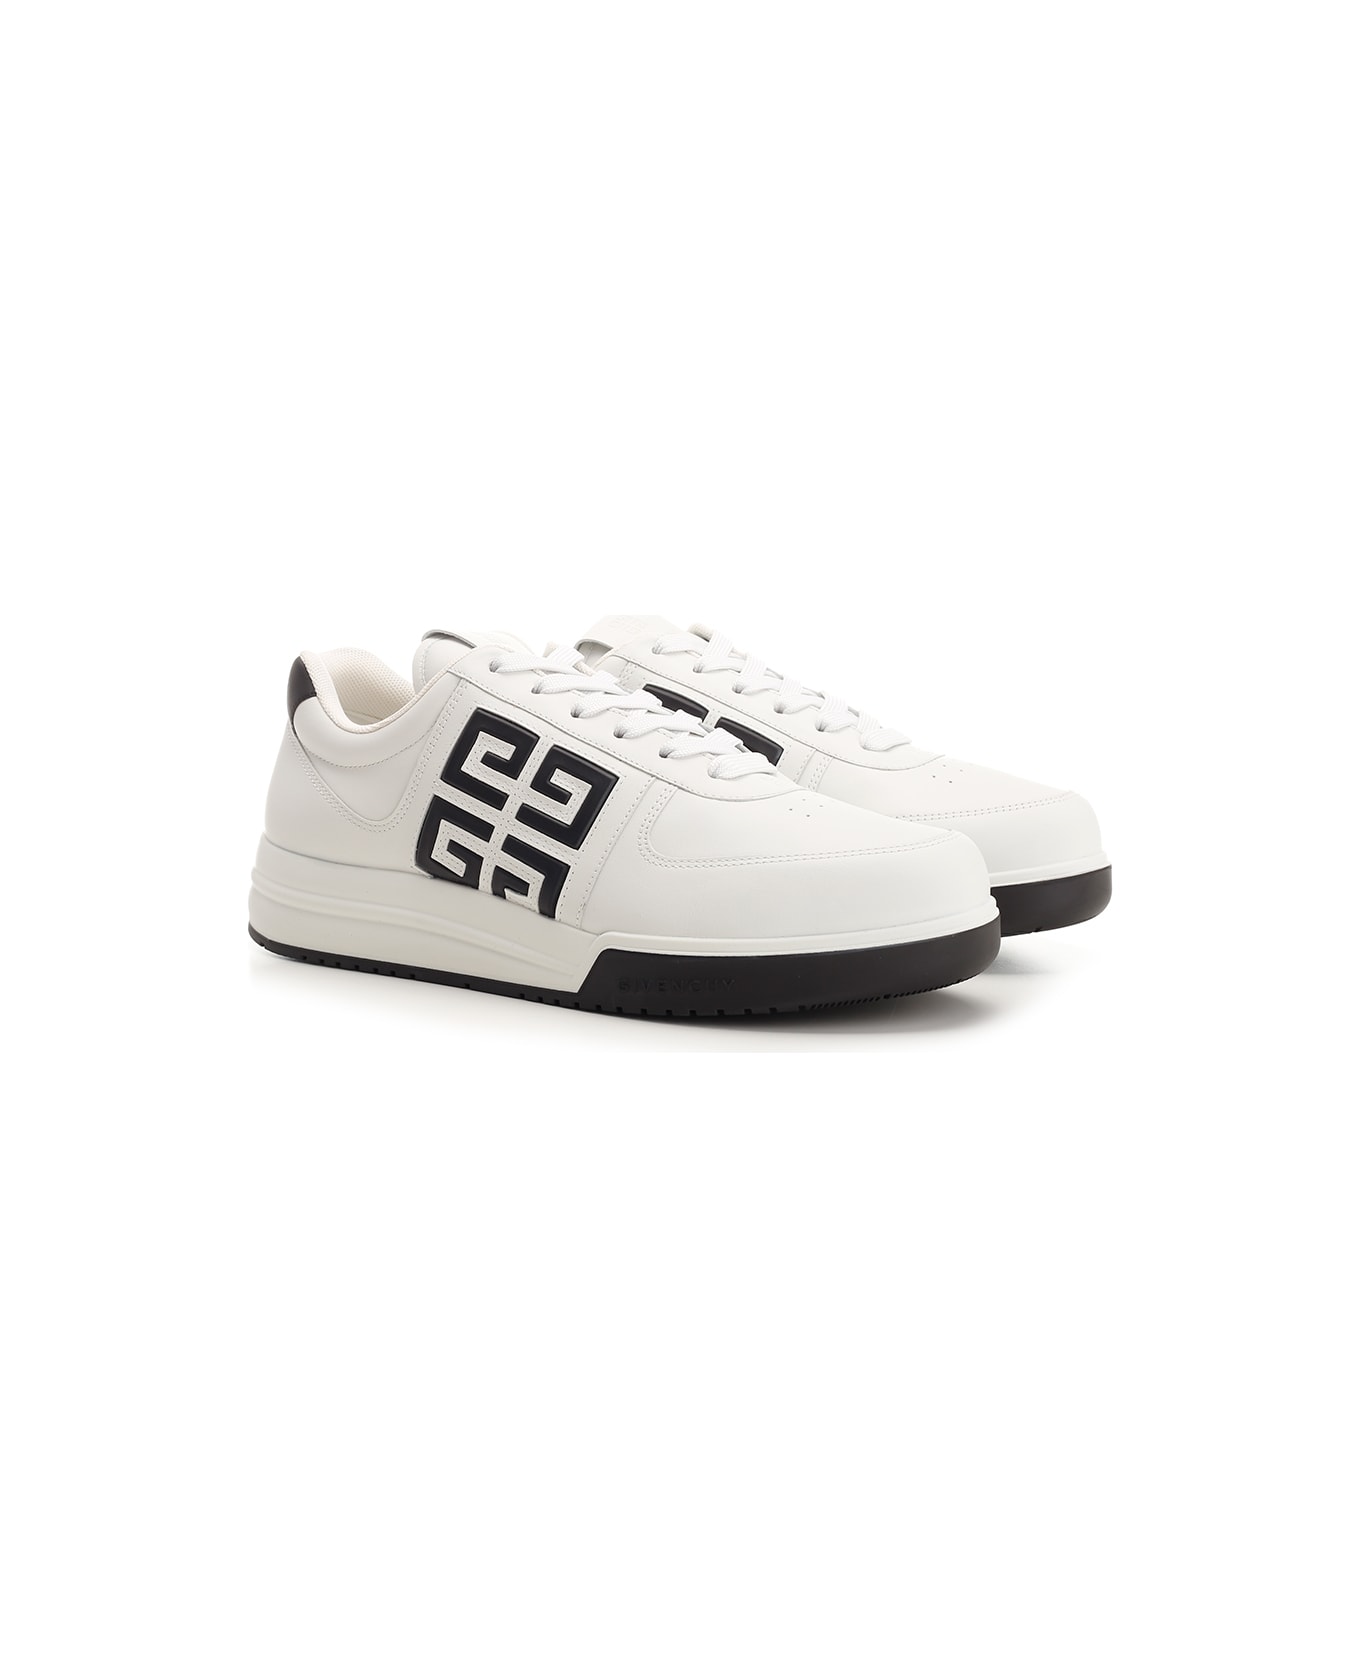 Givenchy White/black 'g4' Sneakers - White スニーカー